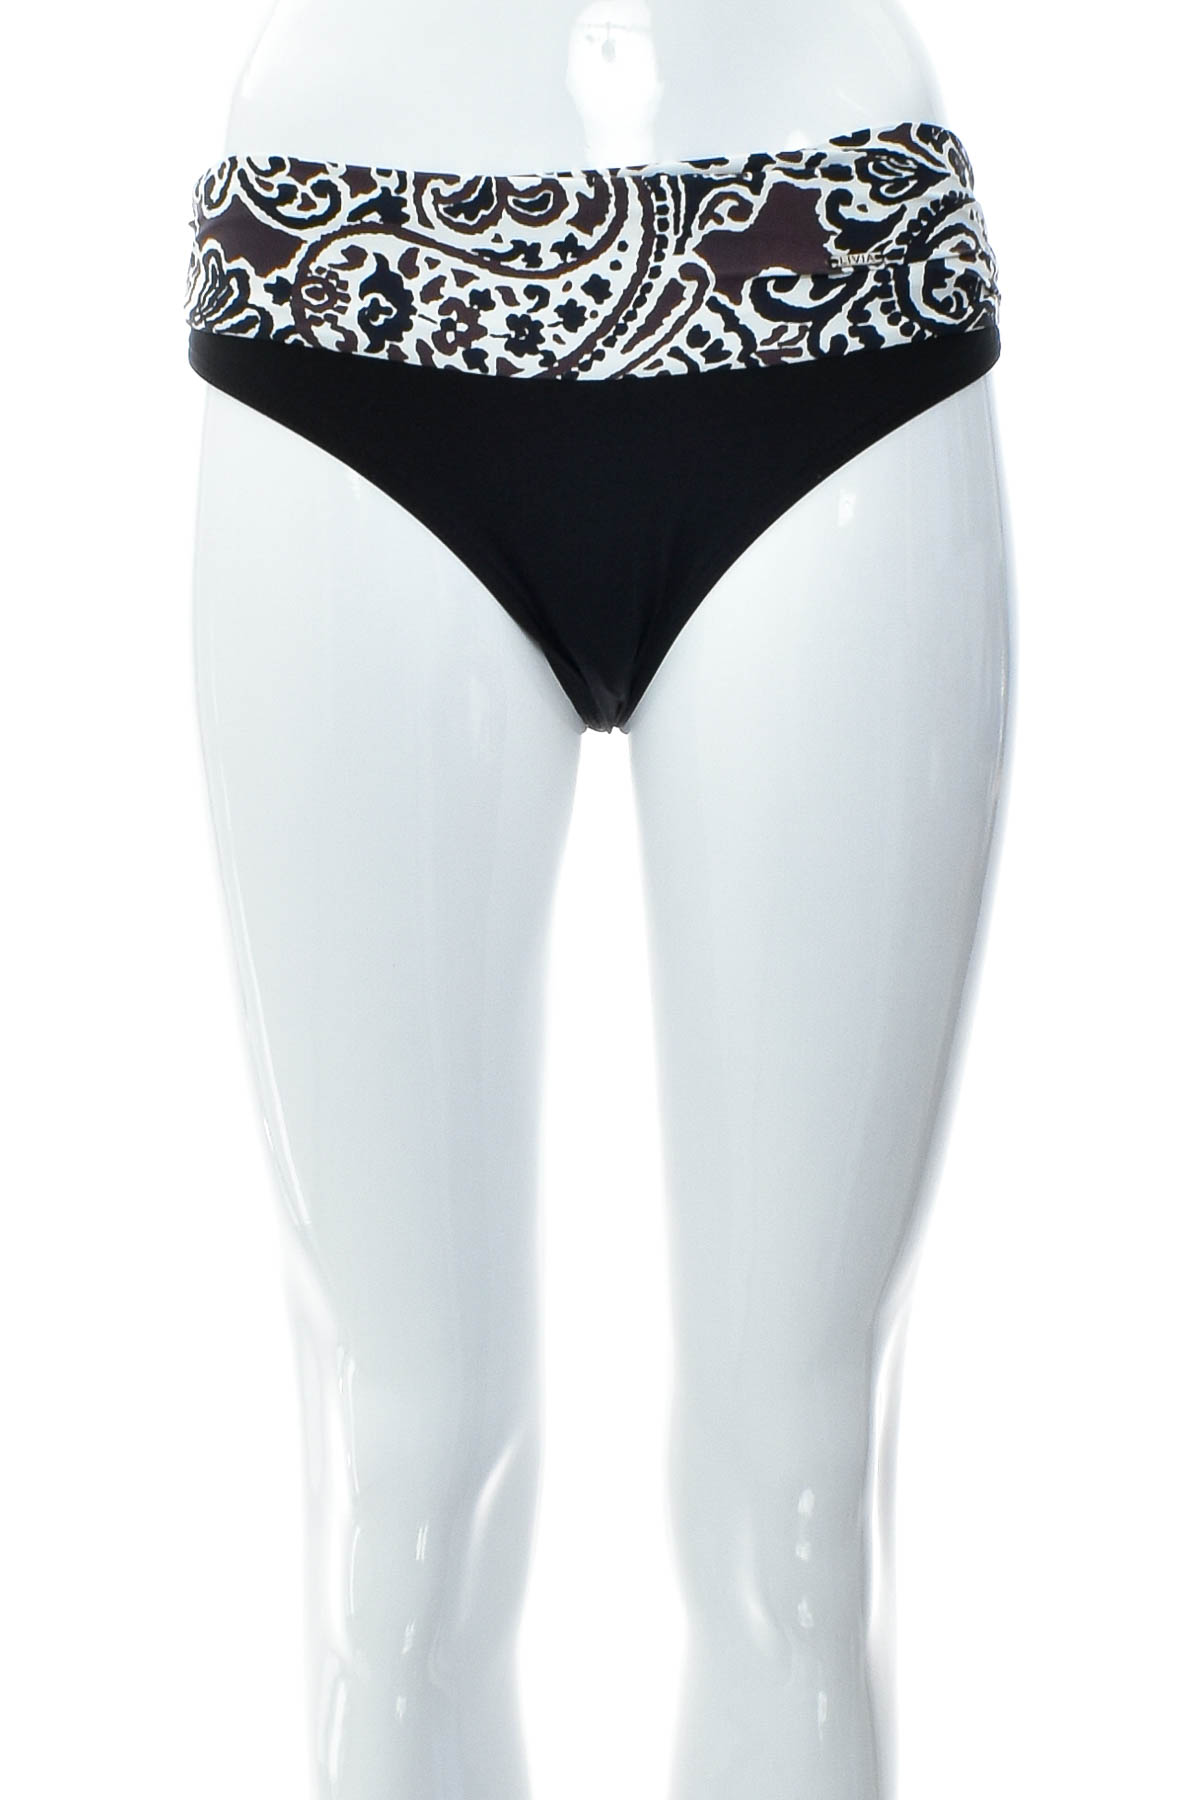 Women's swimsuit bottoms - Livia - 0